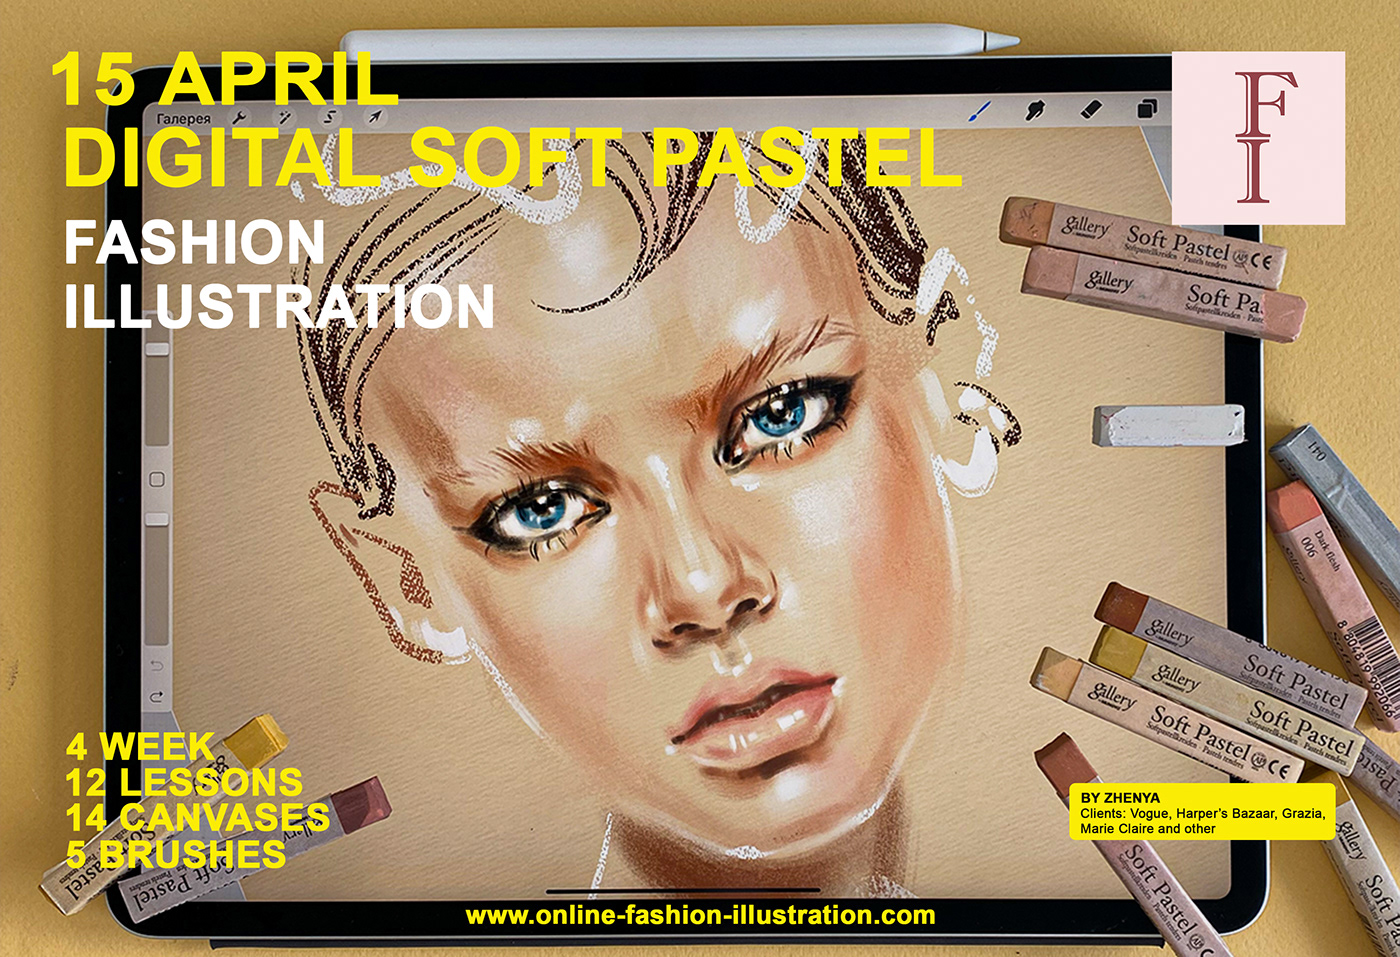 Fashion  fashion illustration portrait editorial magazine Graphic Designer Advertising  ILLUSTRATION  Drawing  artwork